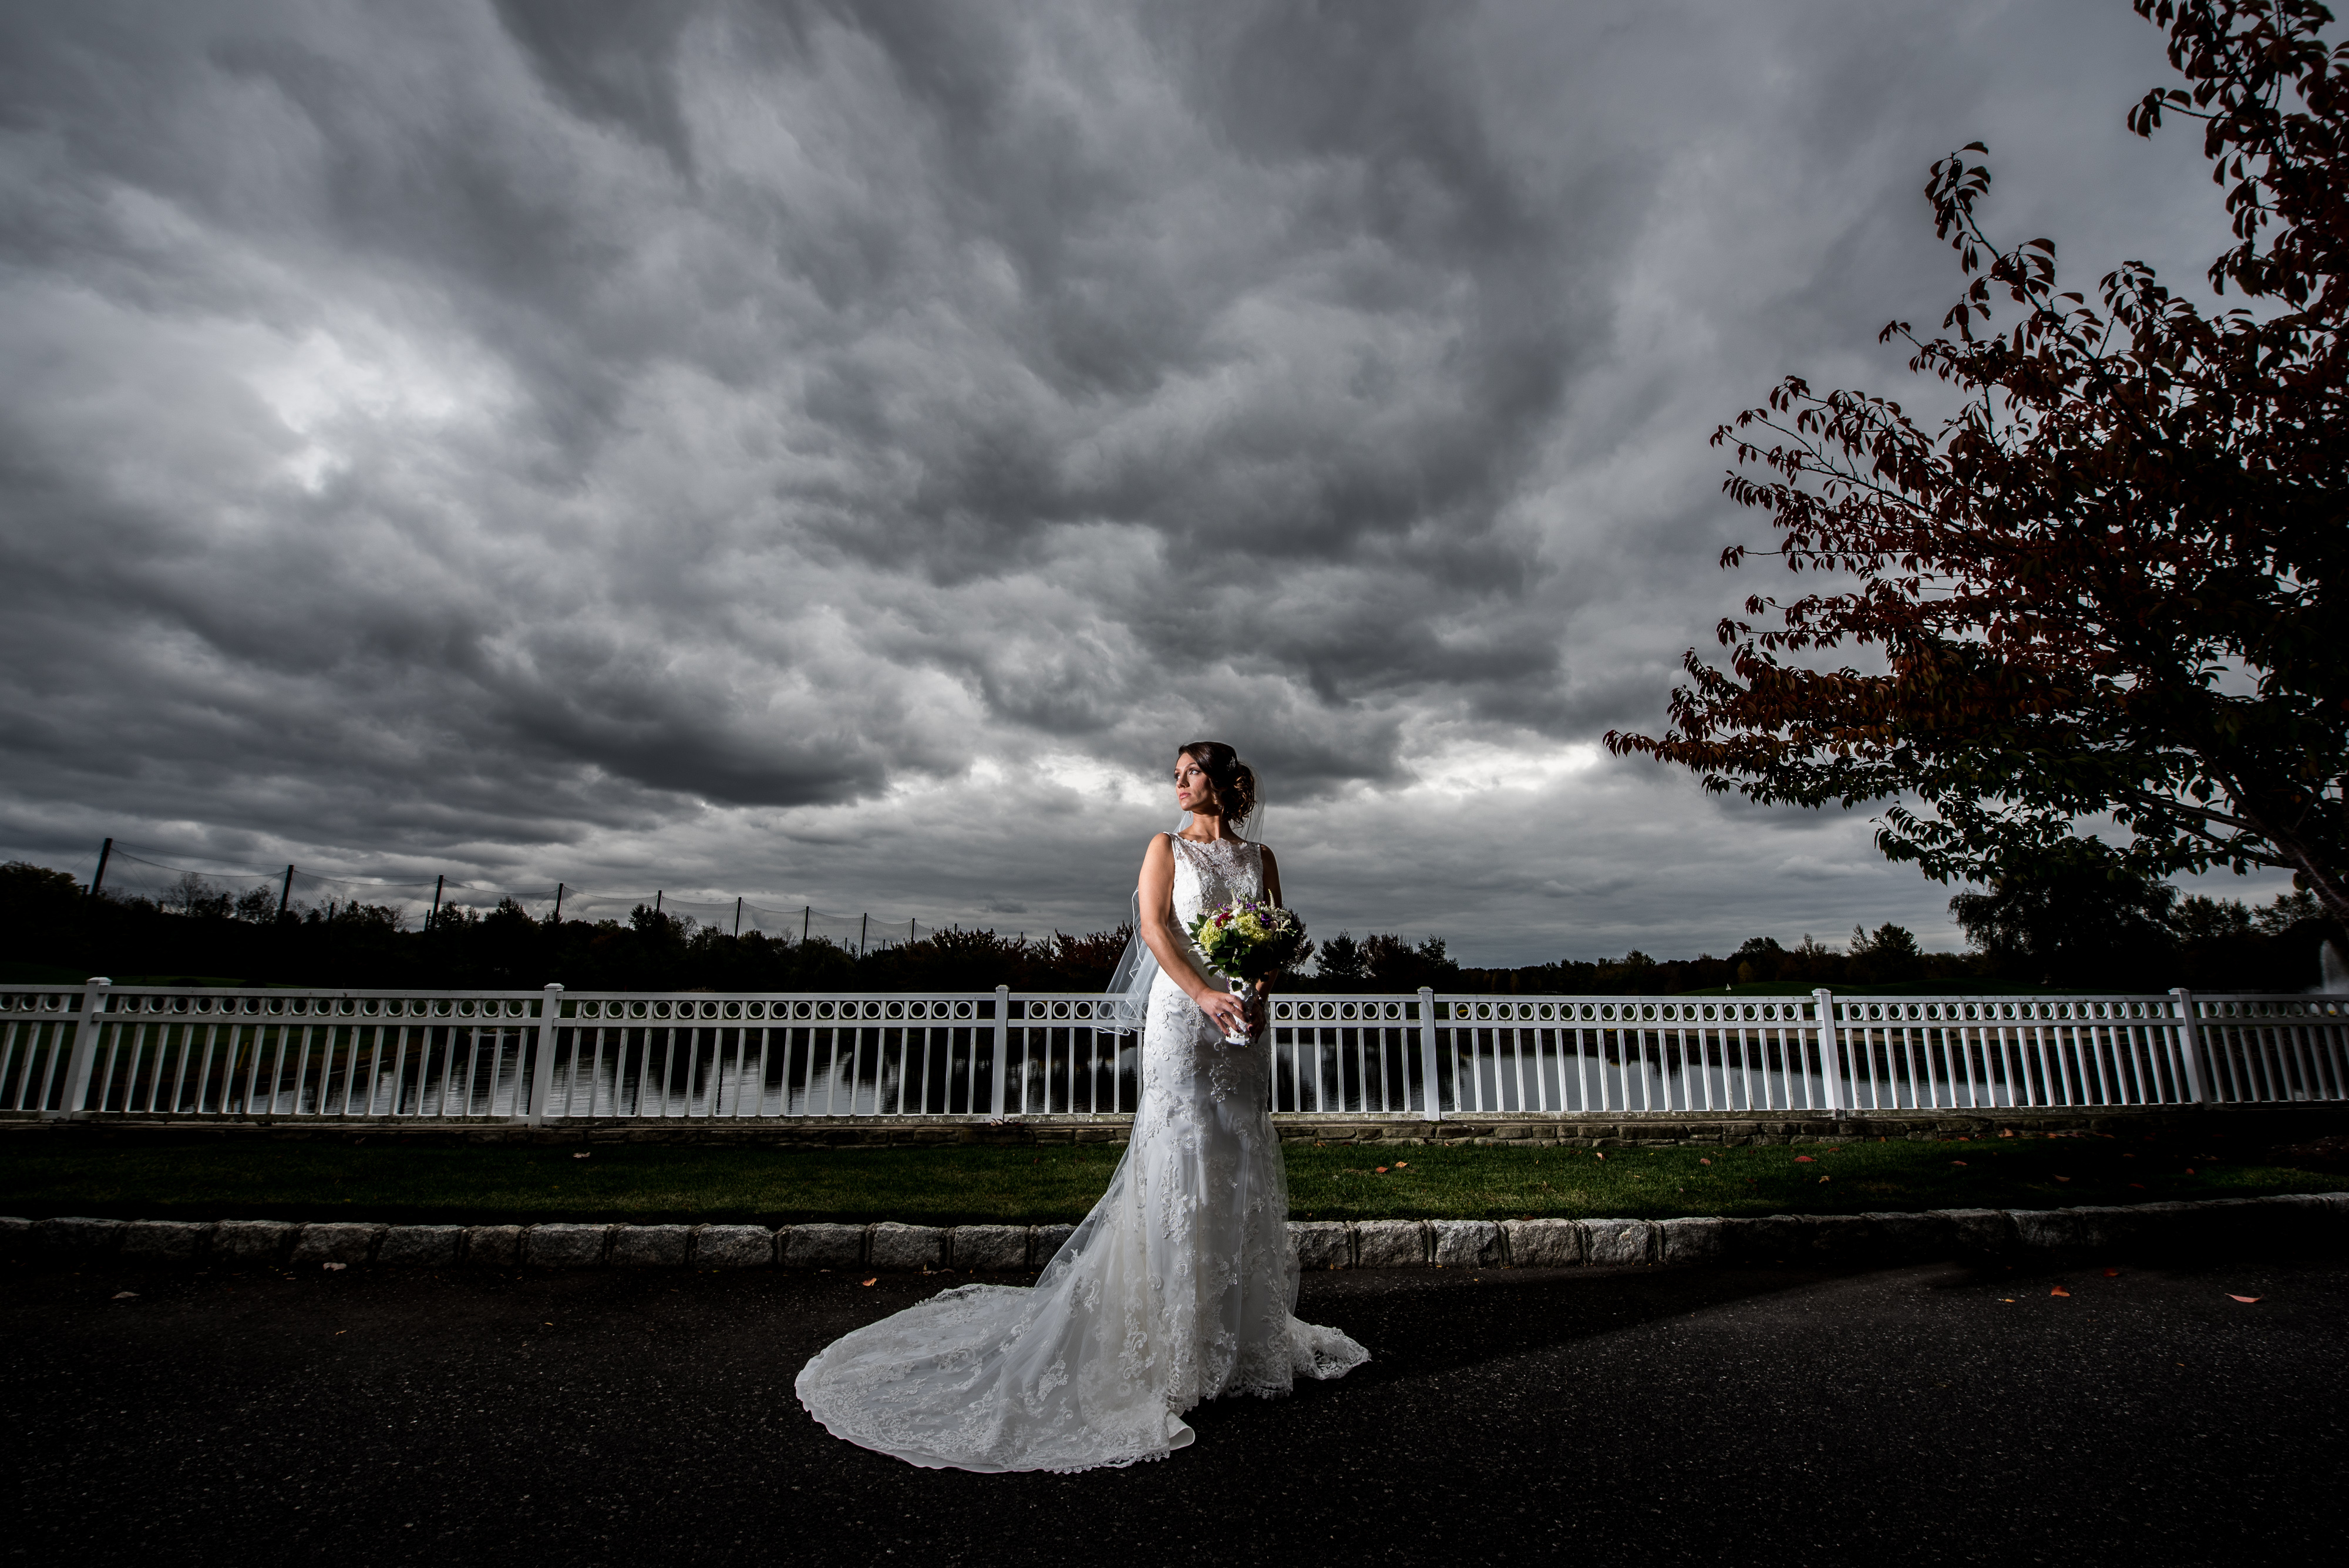 Bride poses under a gray stormy sky | Lotus Wedding Photography